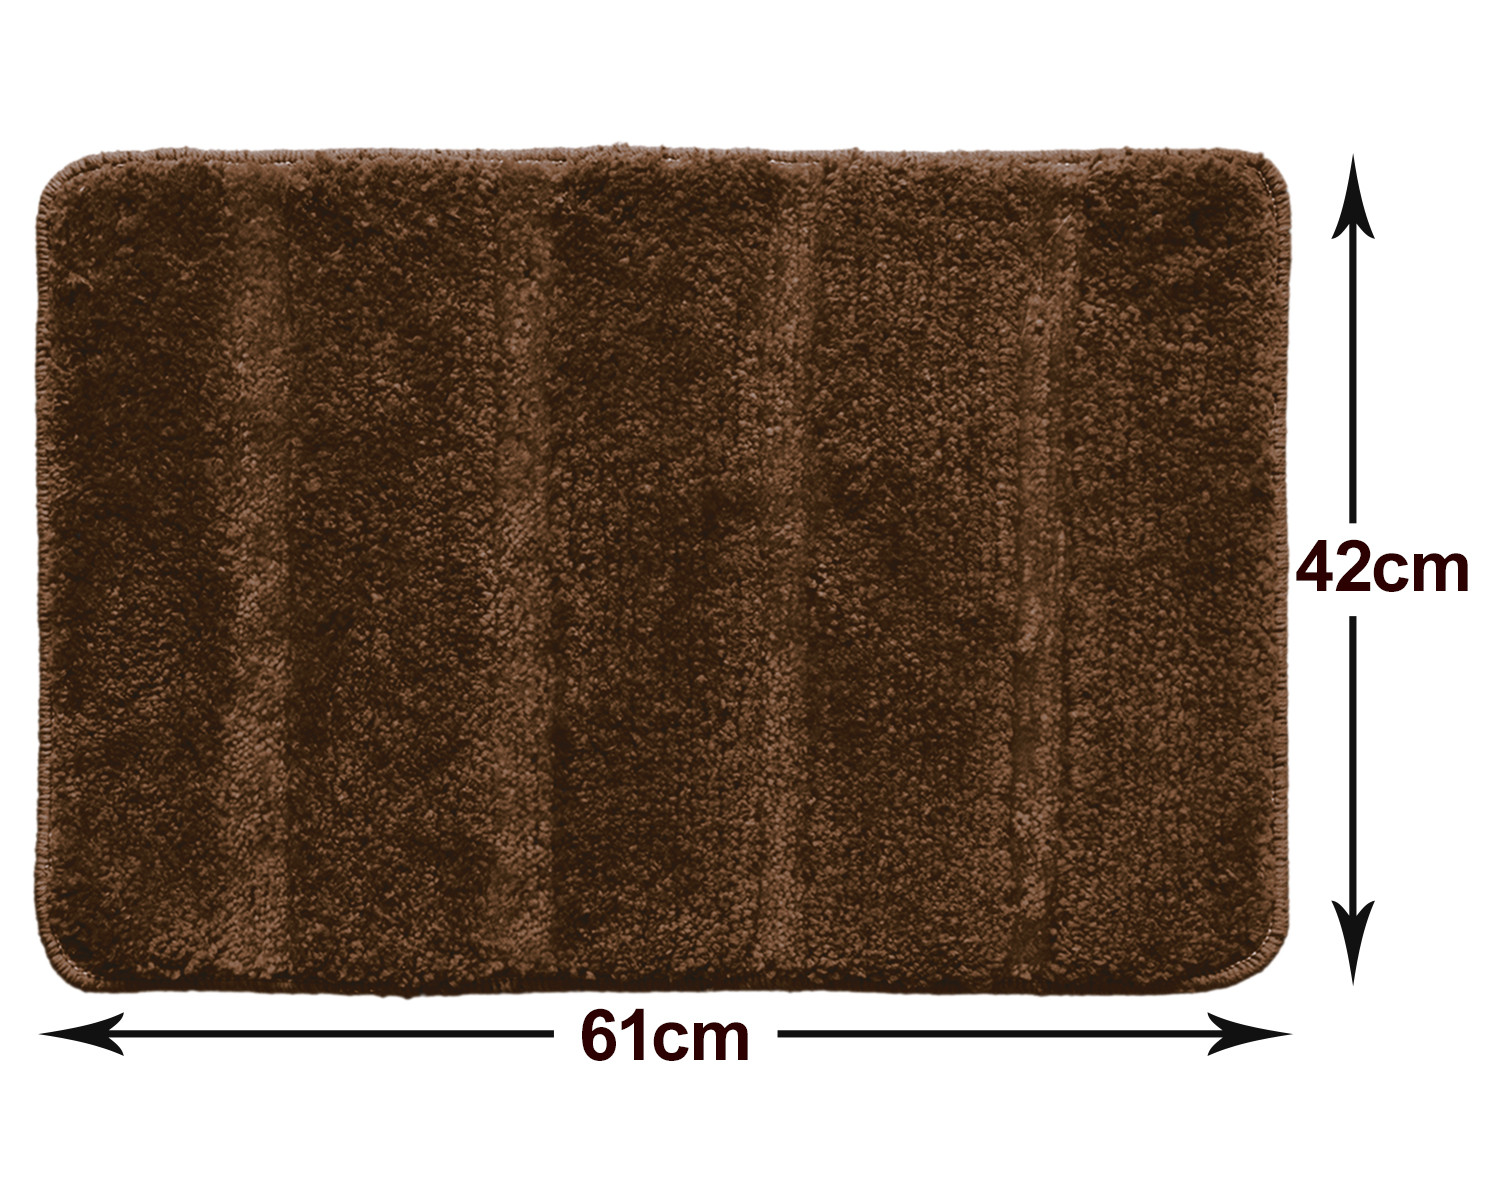 Kuber Industries Strips Design Cotton Door Mat For Porch/Kitchen/Bathroom/Laundry Room, 24